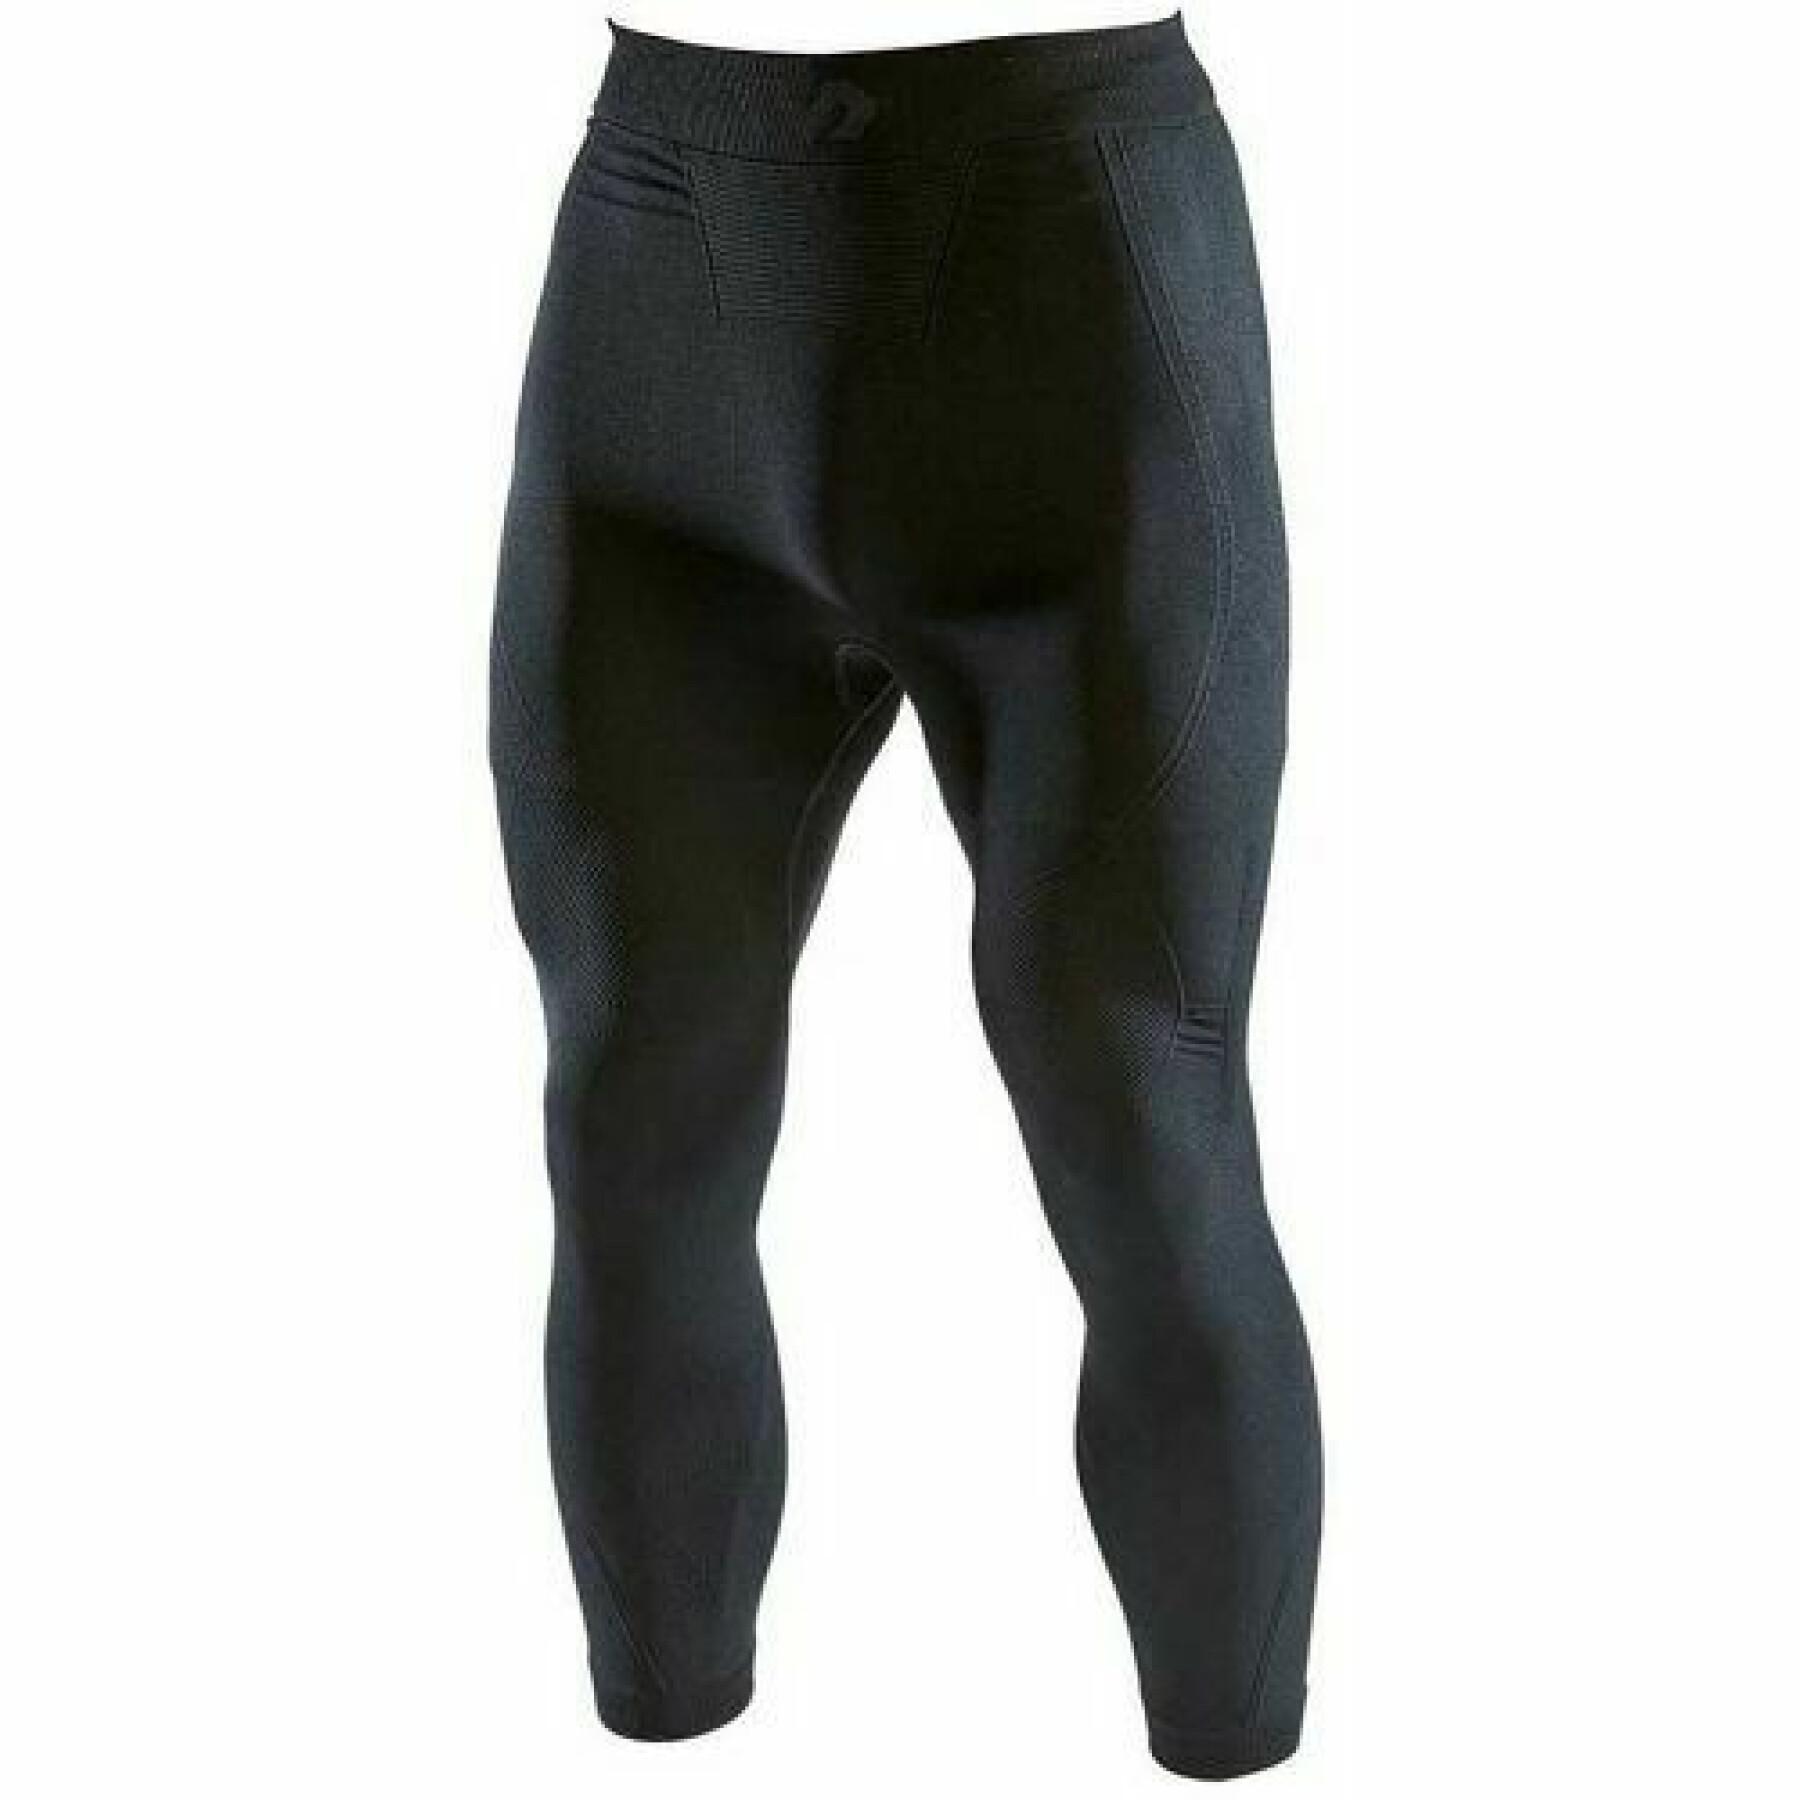 3/4 elite compression pants McDavid - Men's wear - Slocog wear - Baselayers  - Jil Sander geometric motif midi dress